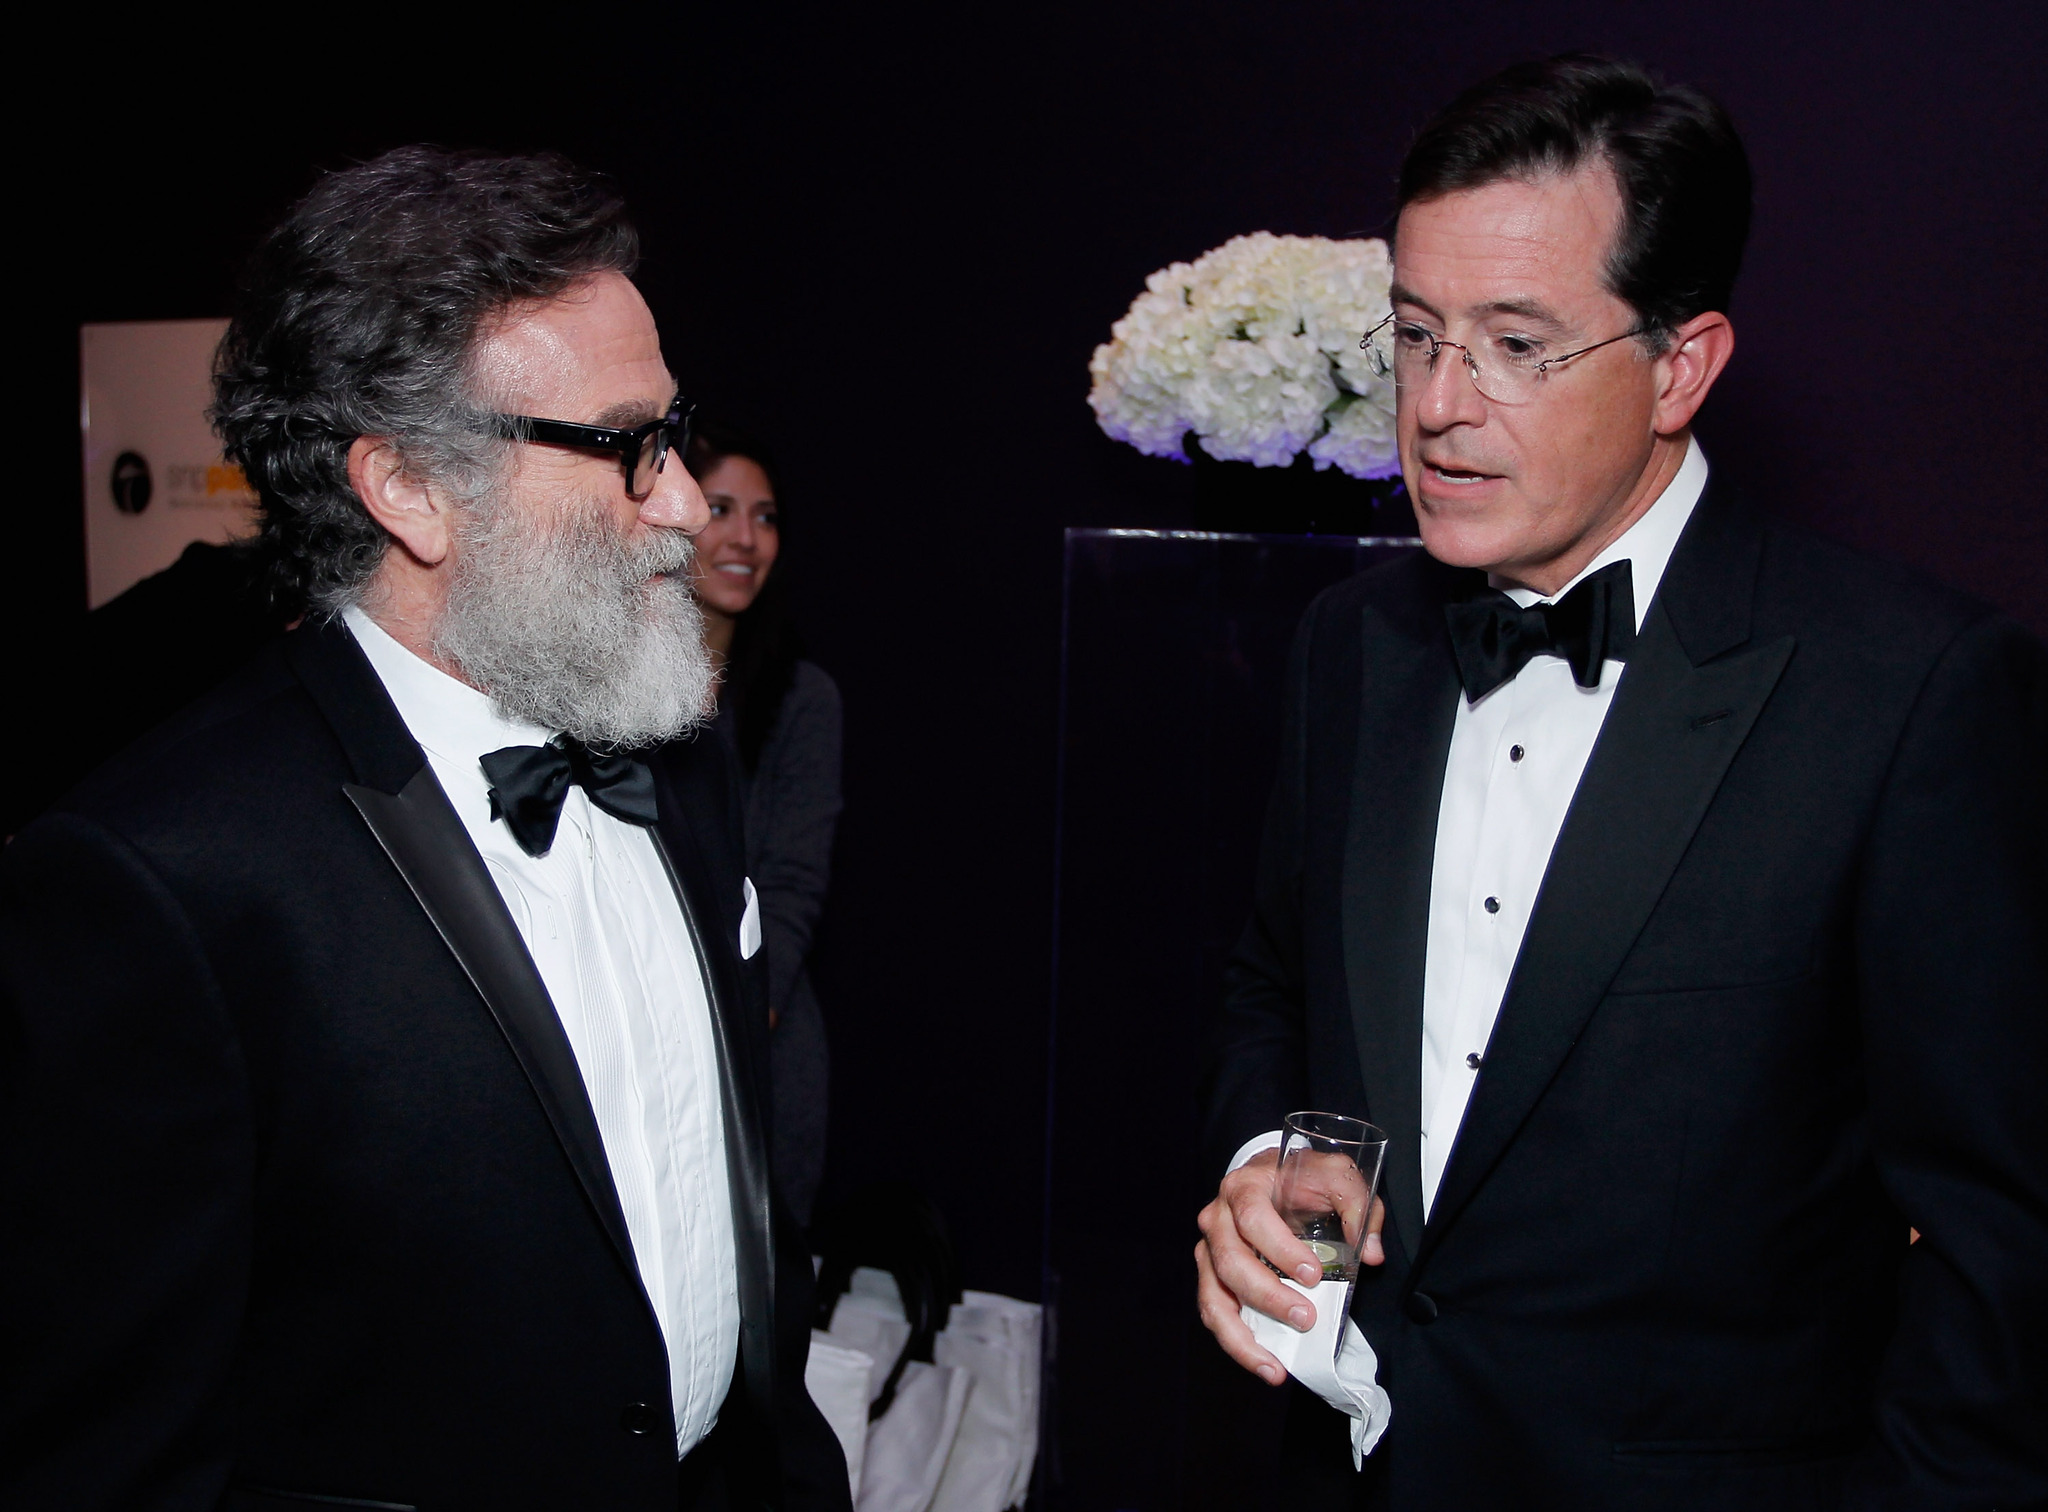 Robin Williams and Stephen Colbert